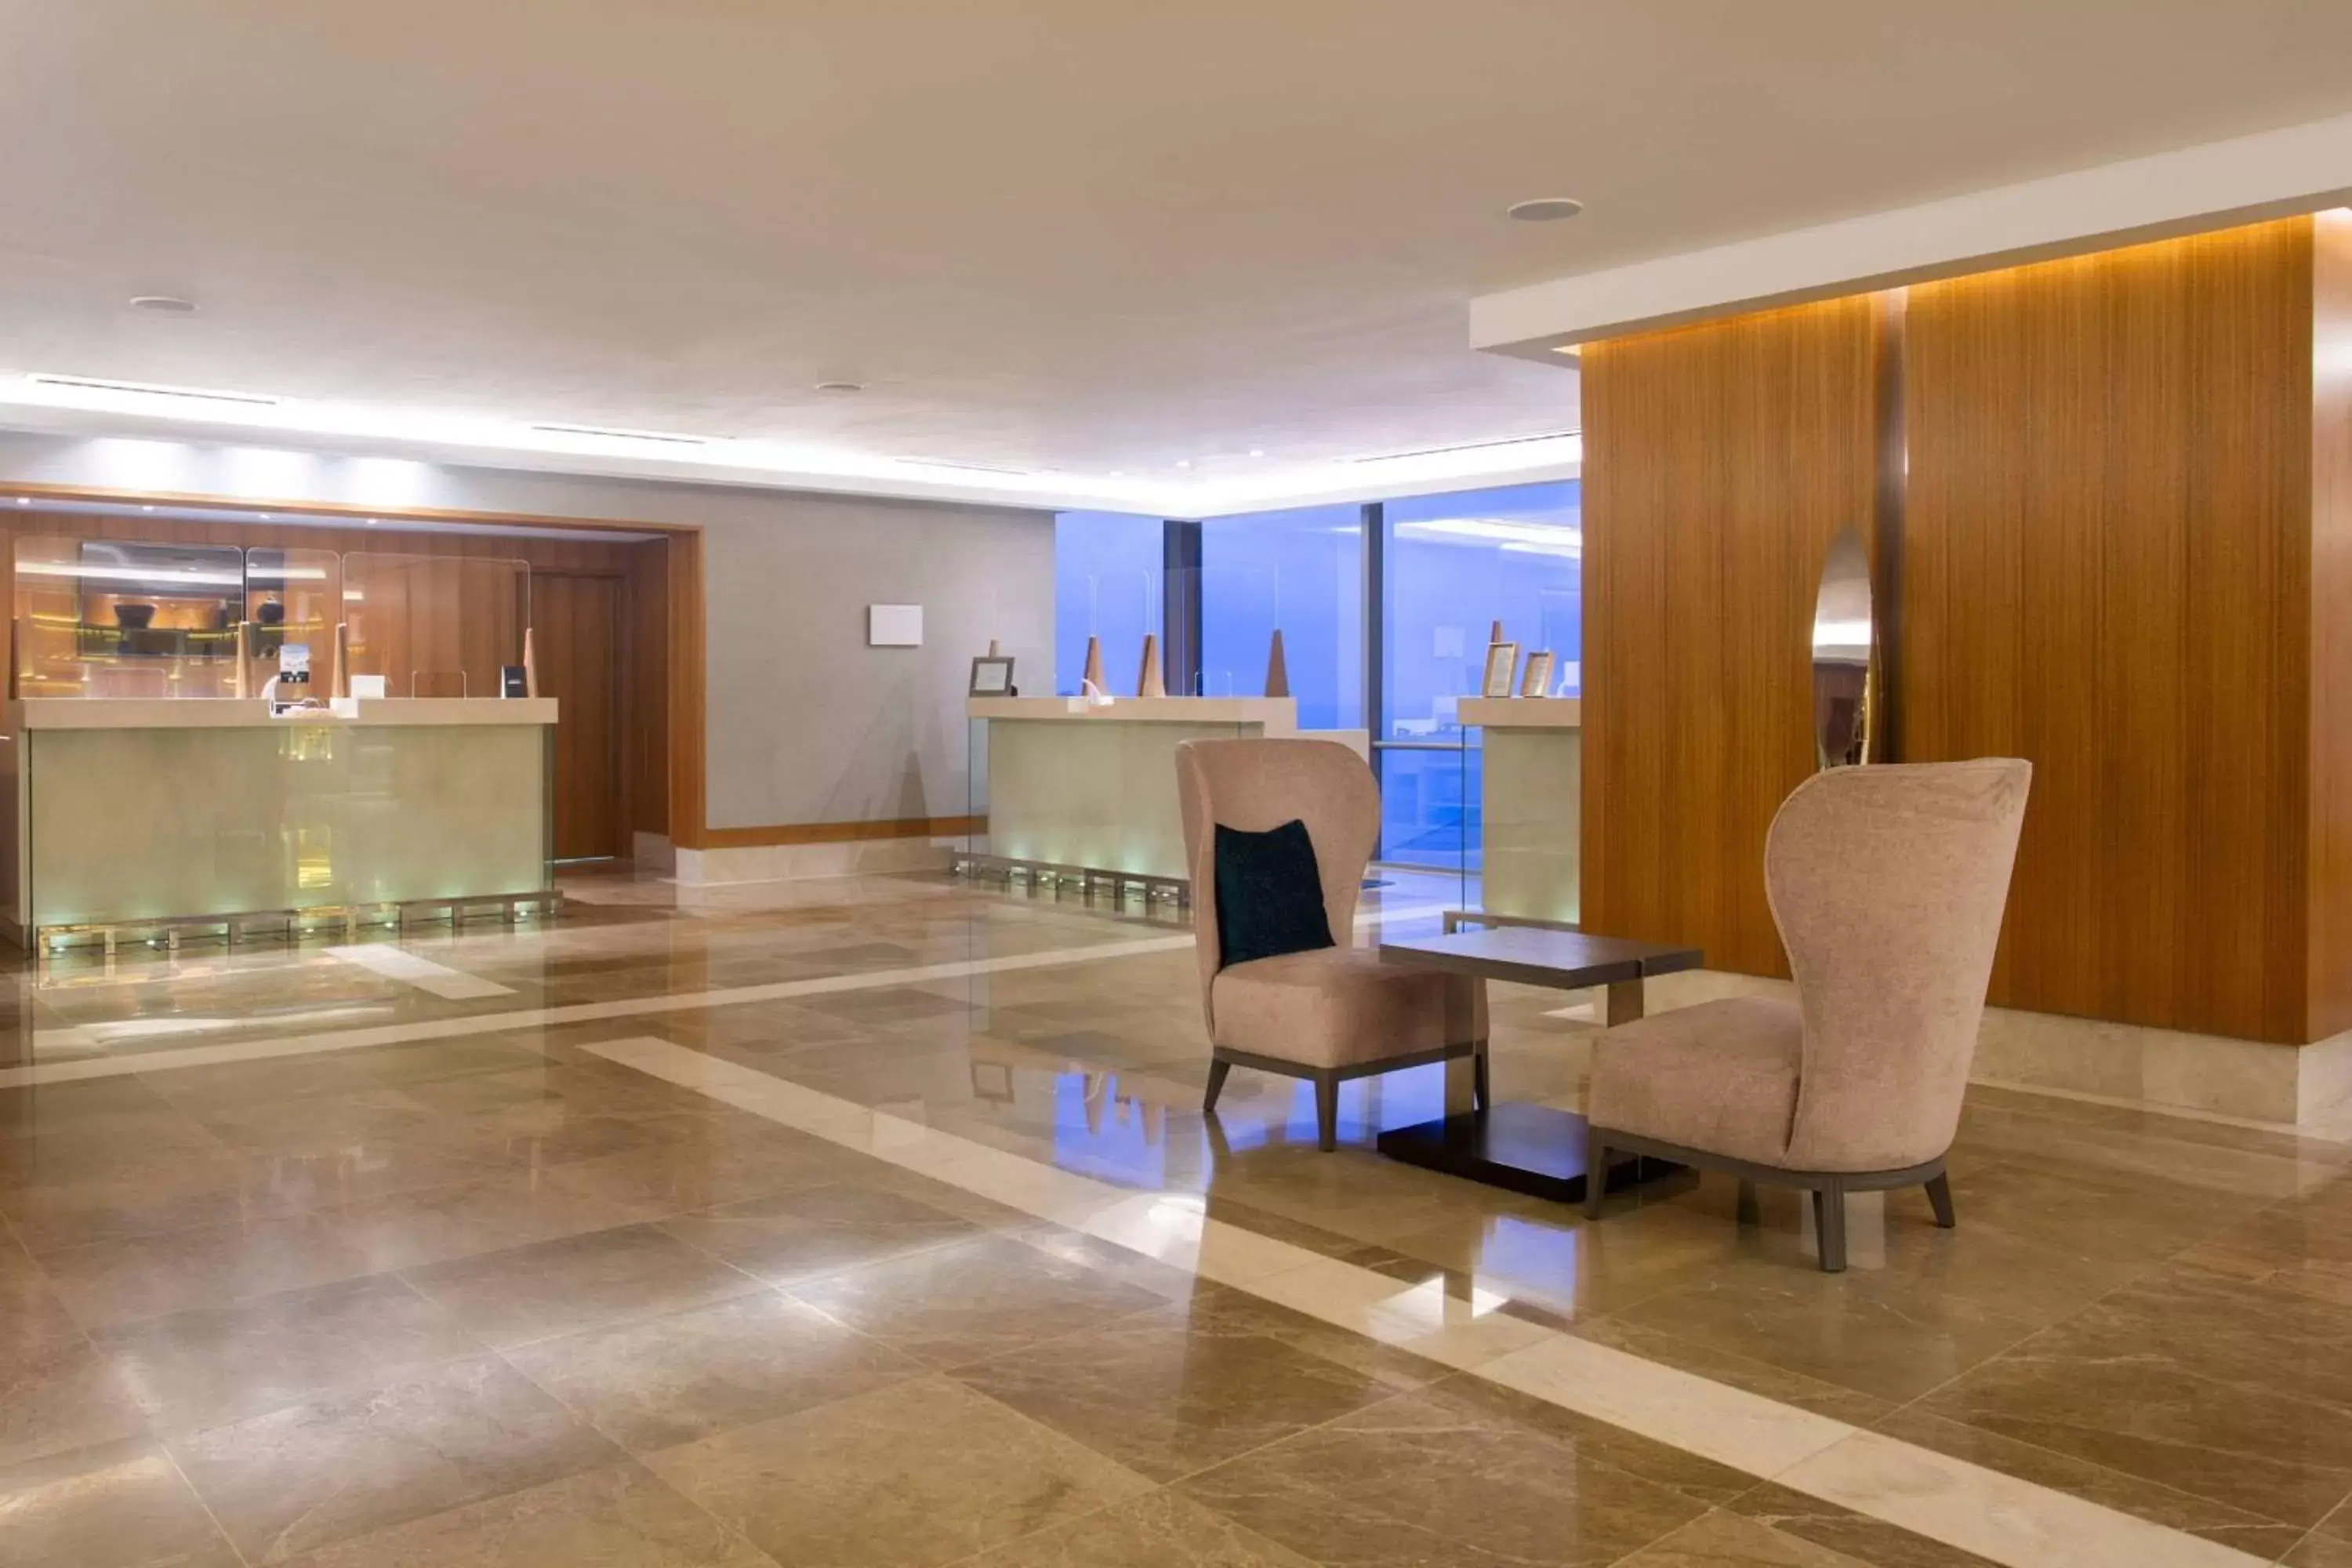 Lobby or reception in JW Marriott Panama